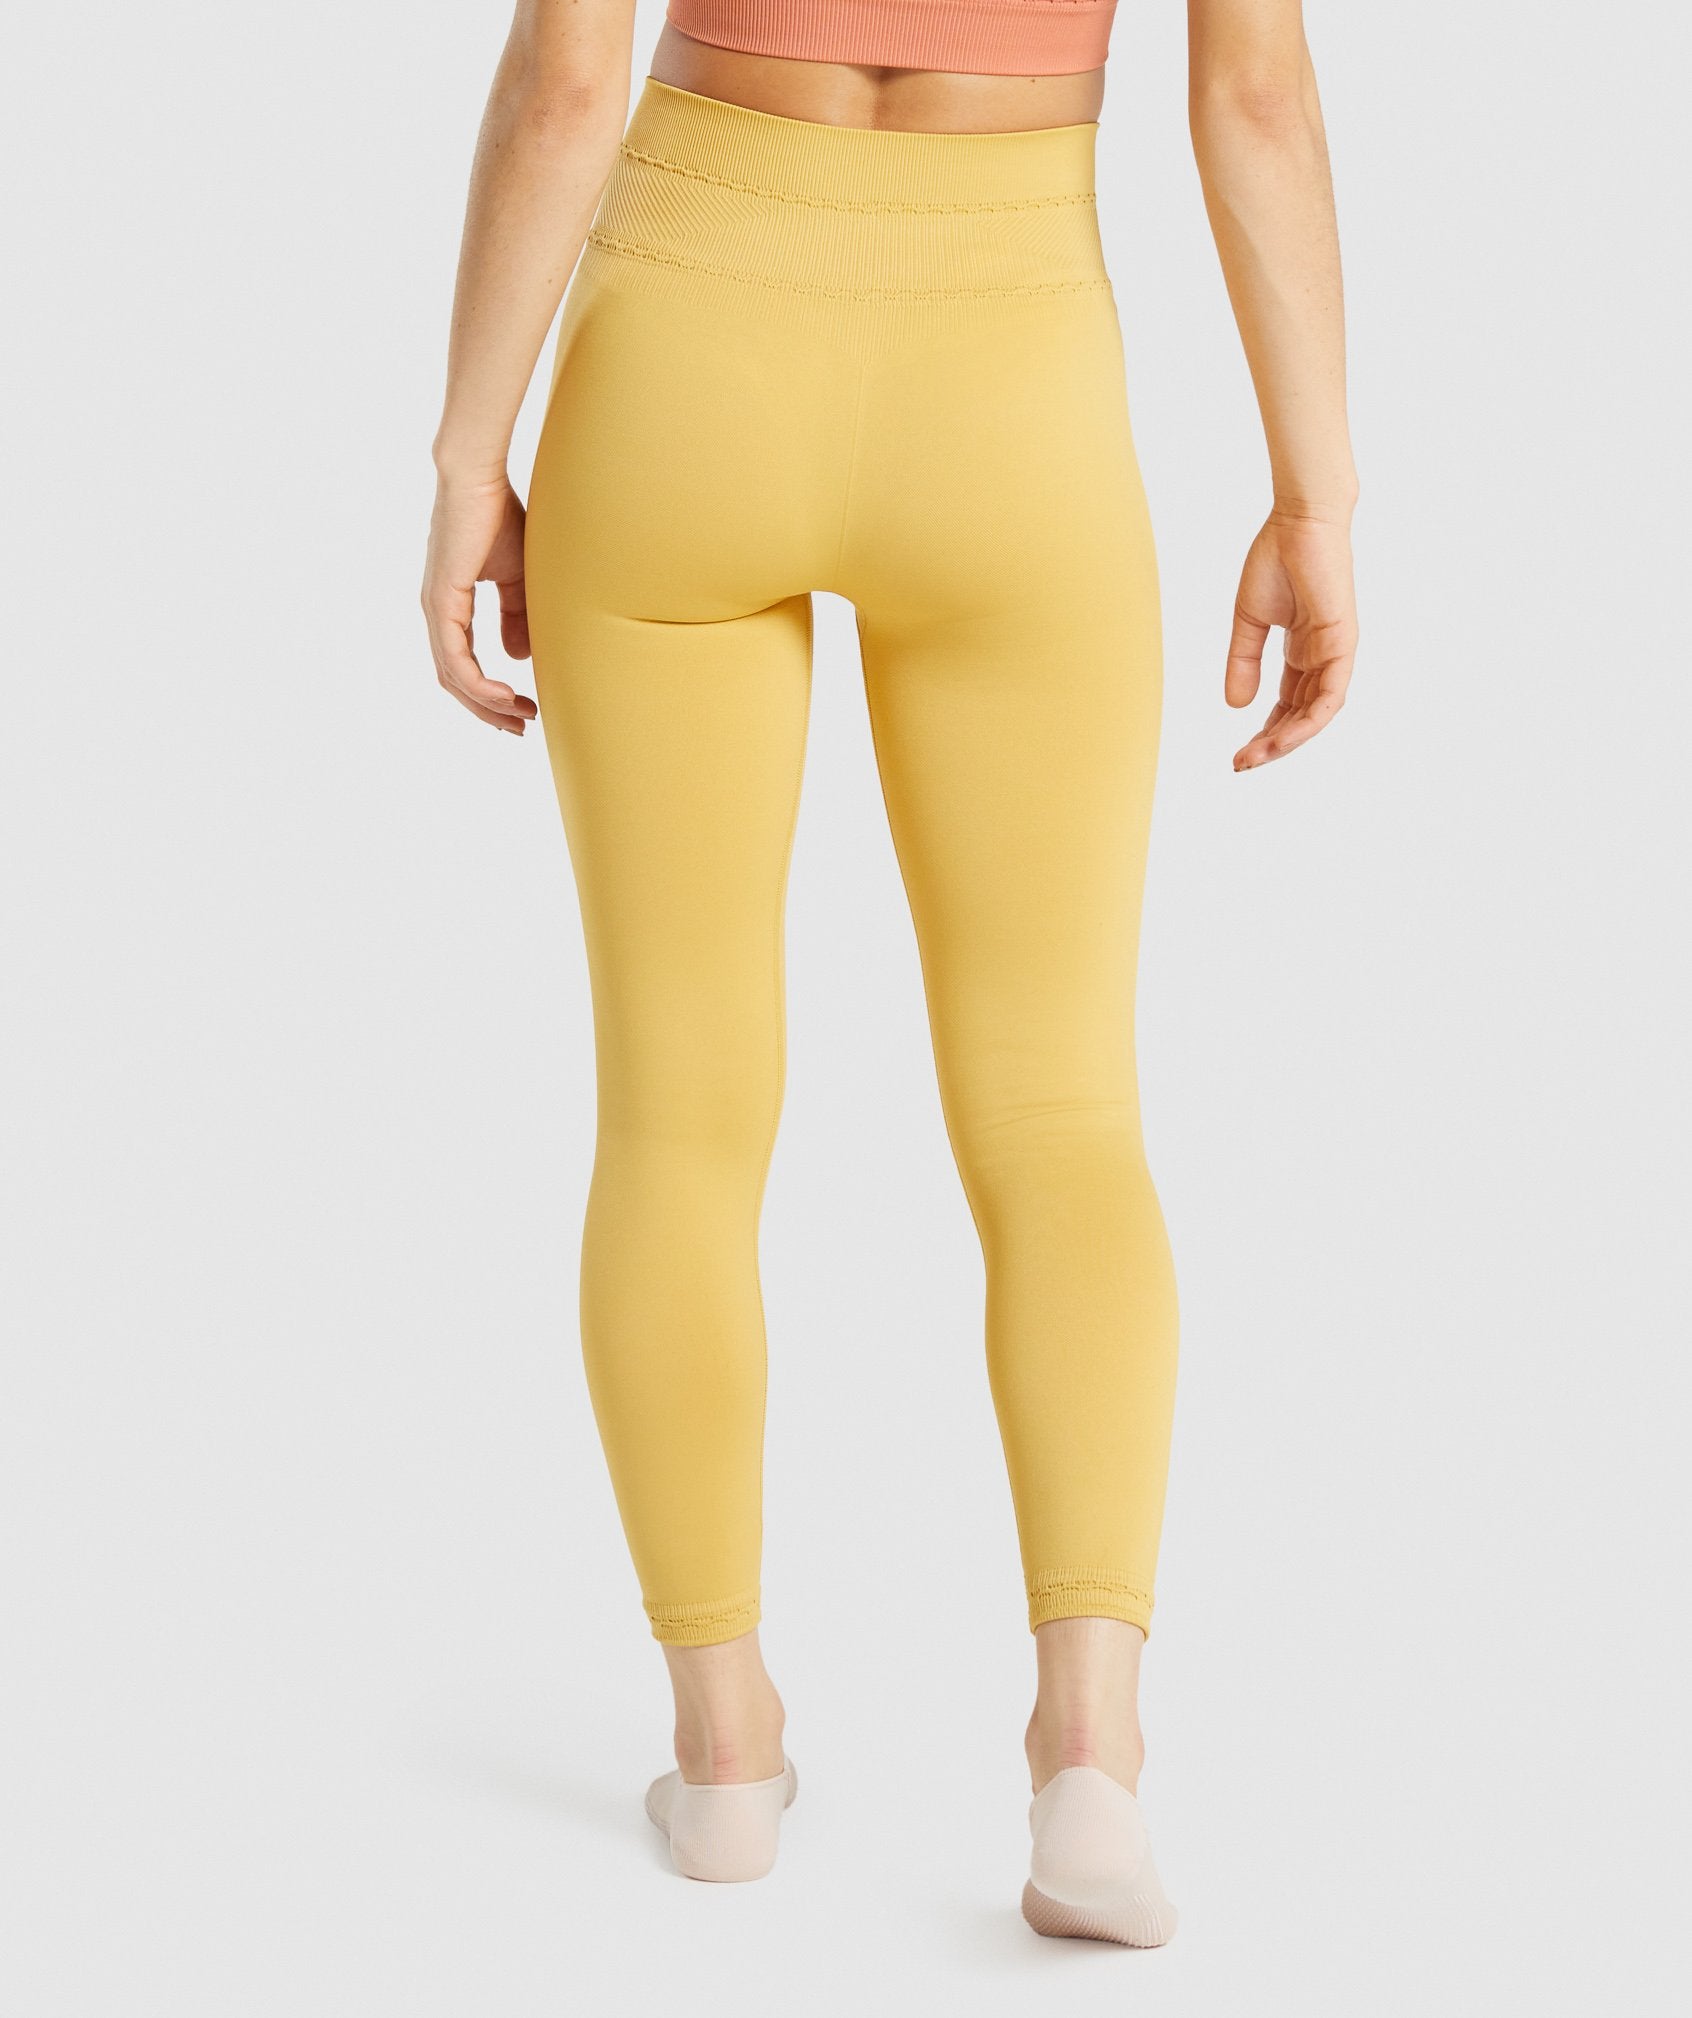 Sgrib - yellow 2 - Women's Fashion Yoga Leggings - xs-xl — scott